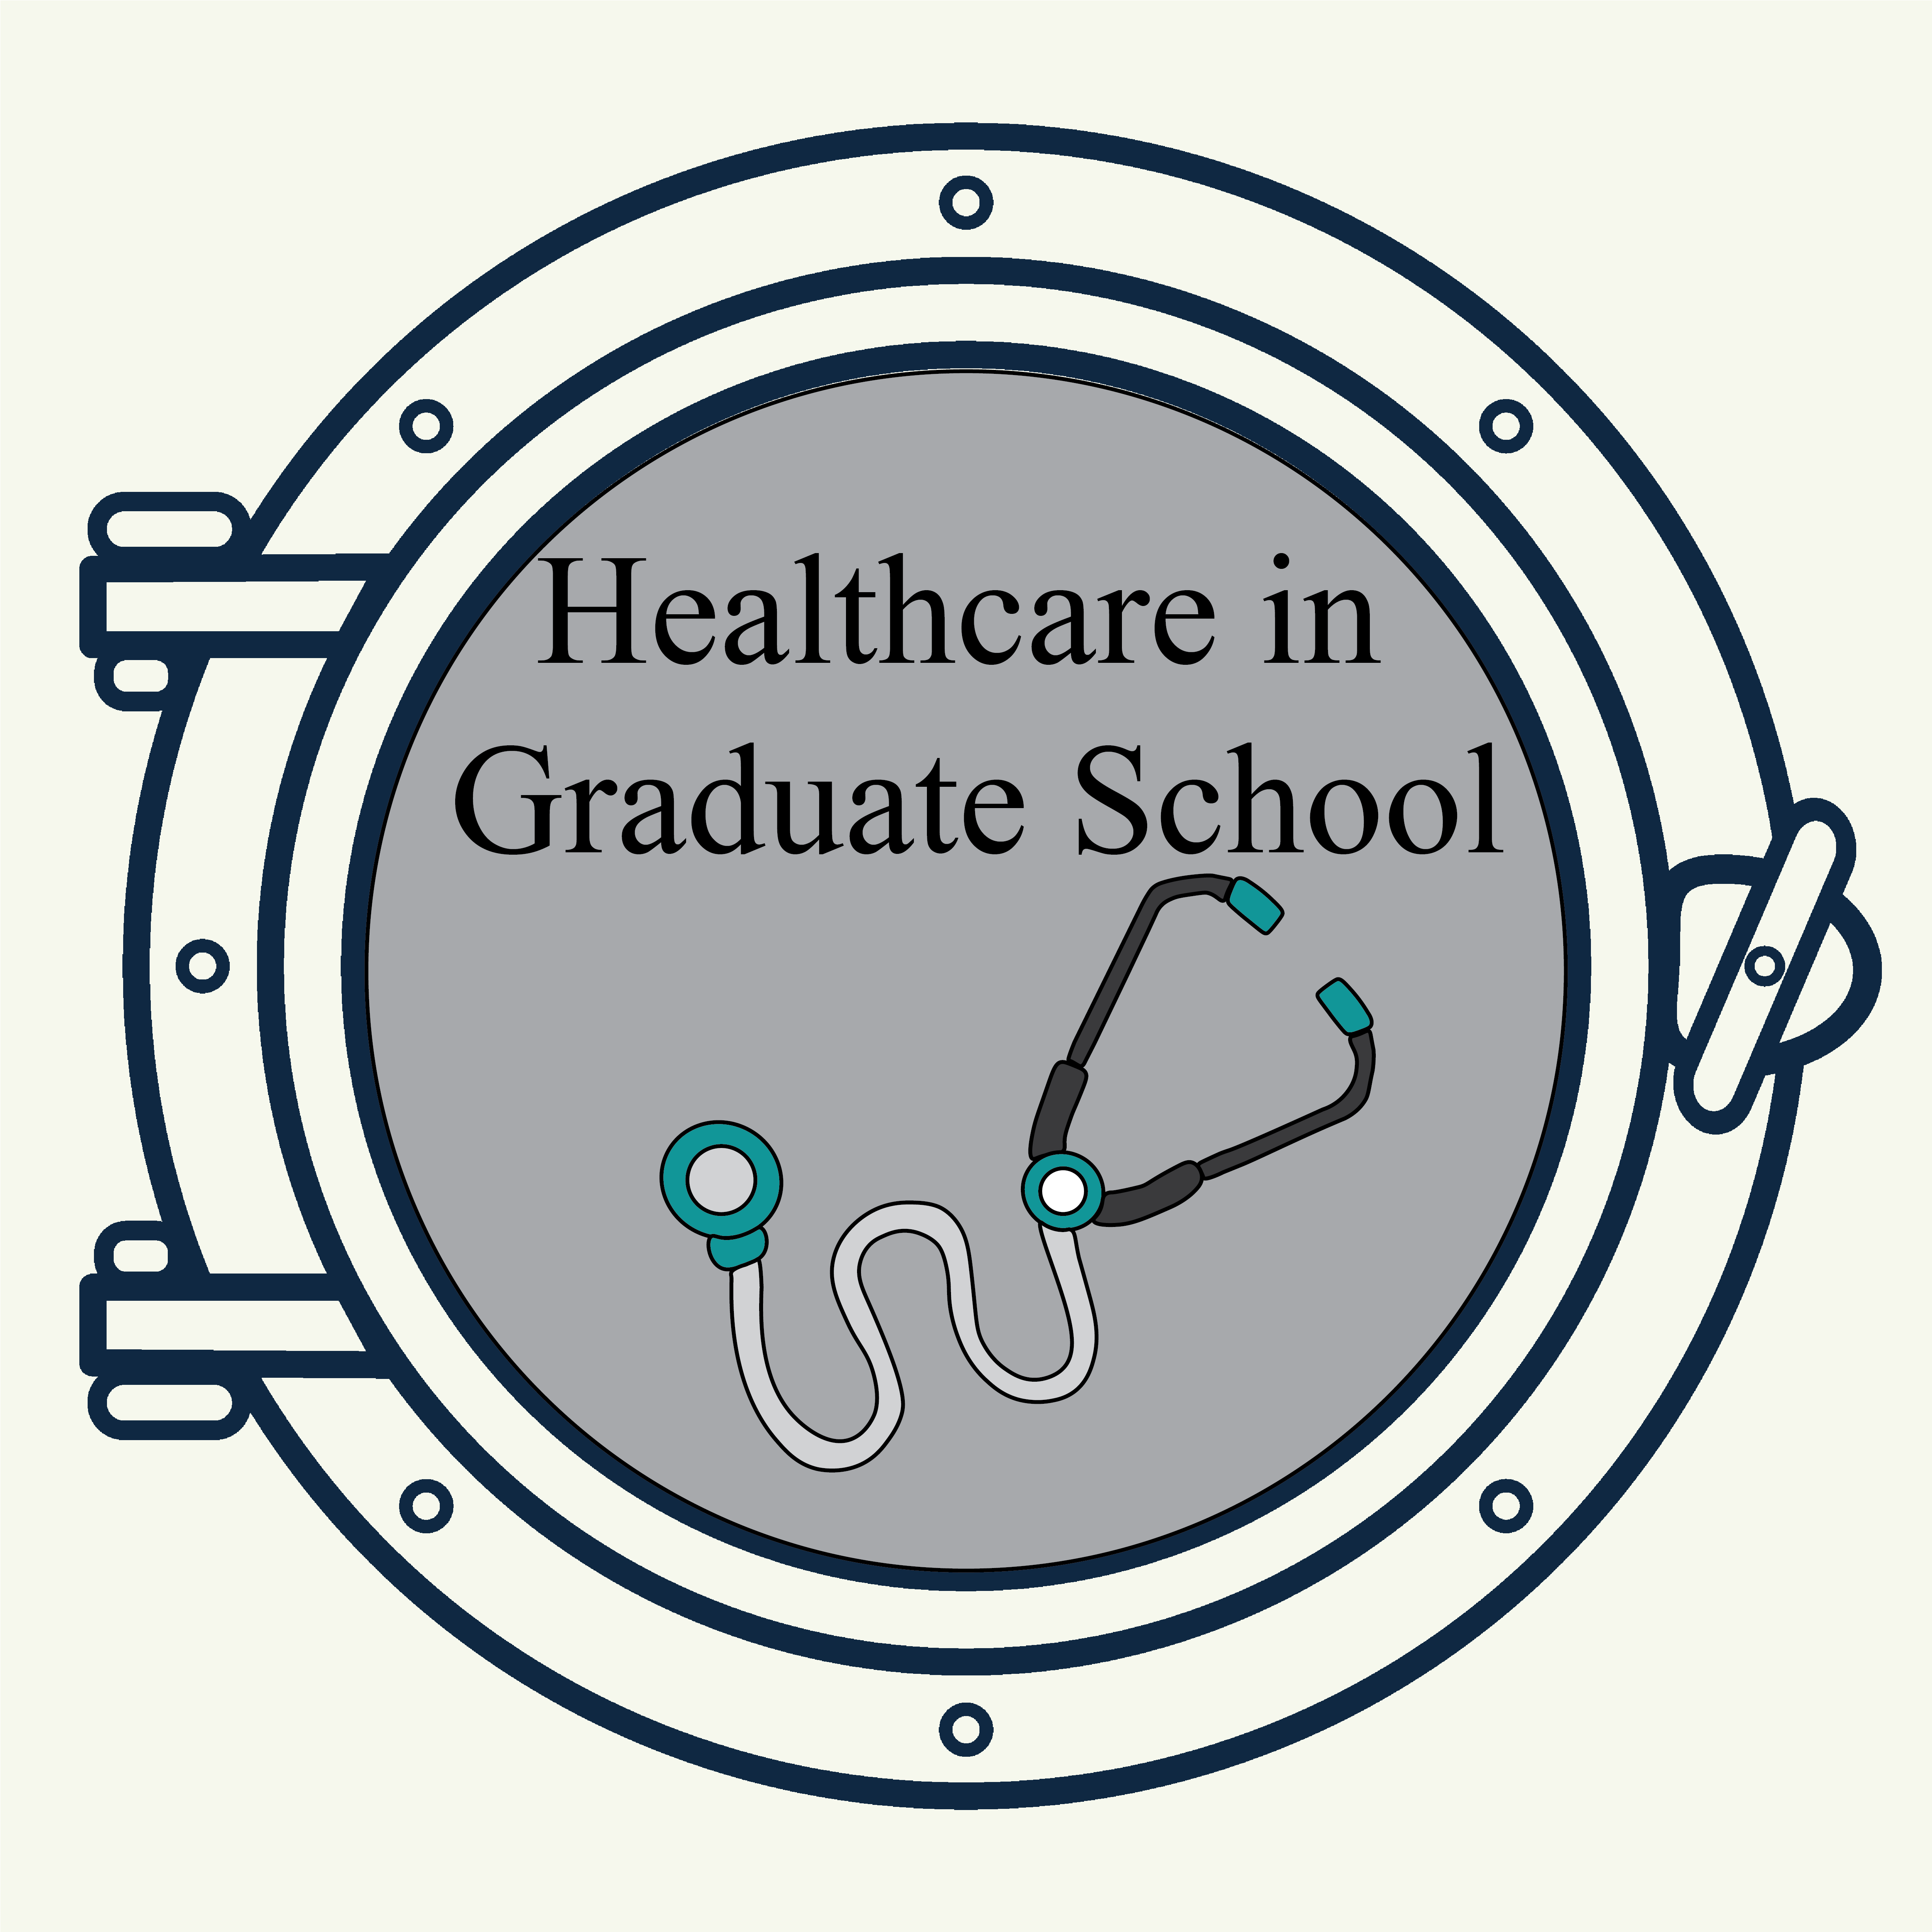 Healthcare_in_Graduate_School_Porthole_Graphic